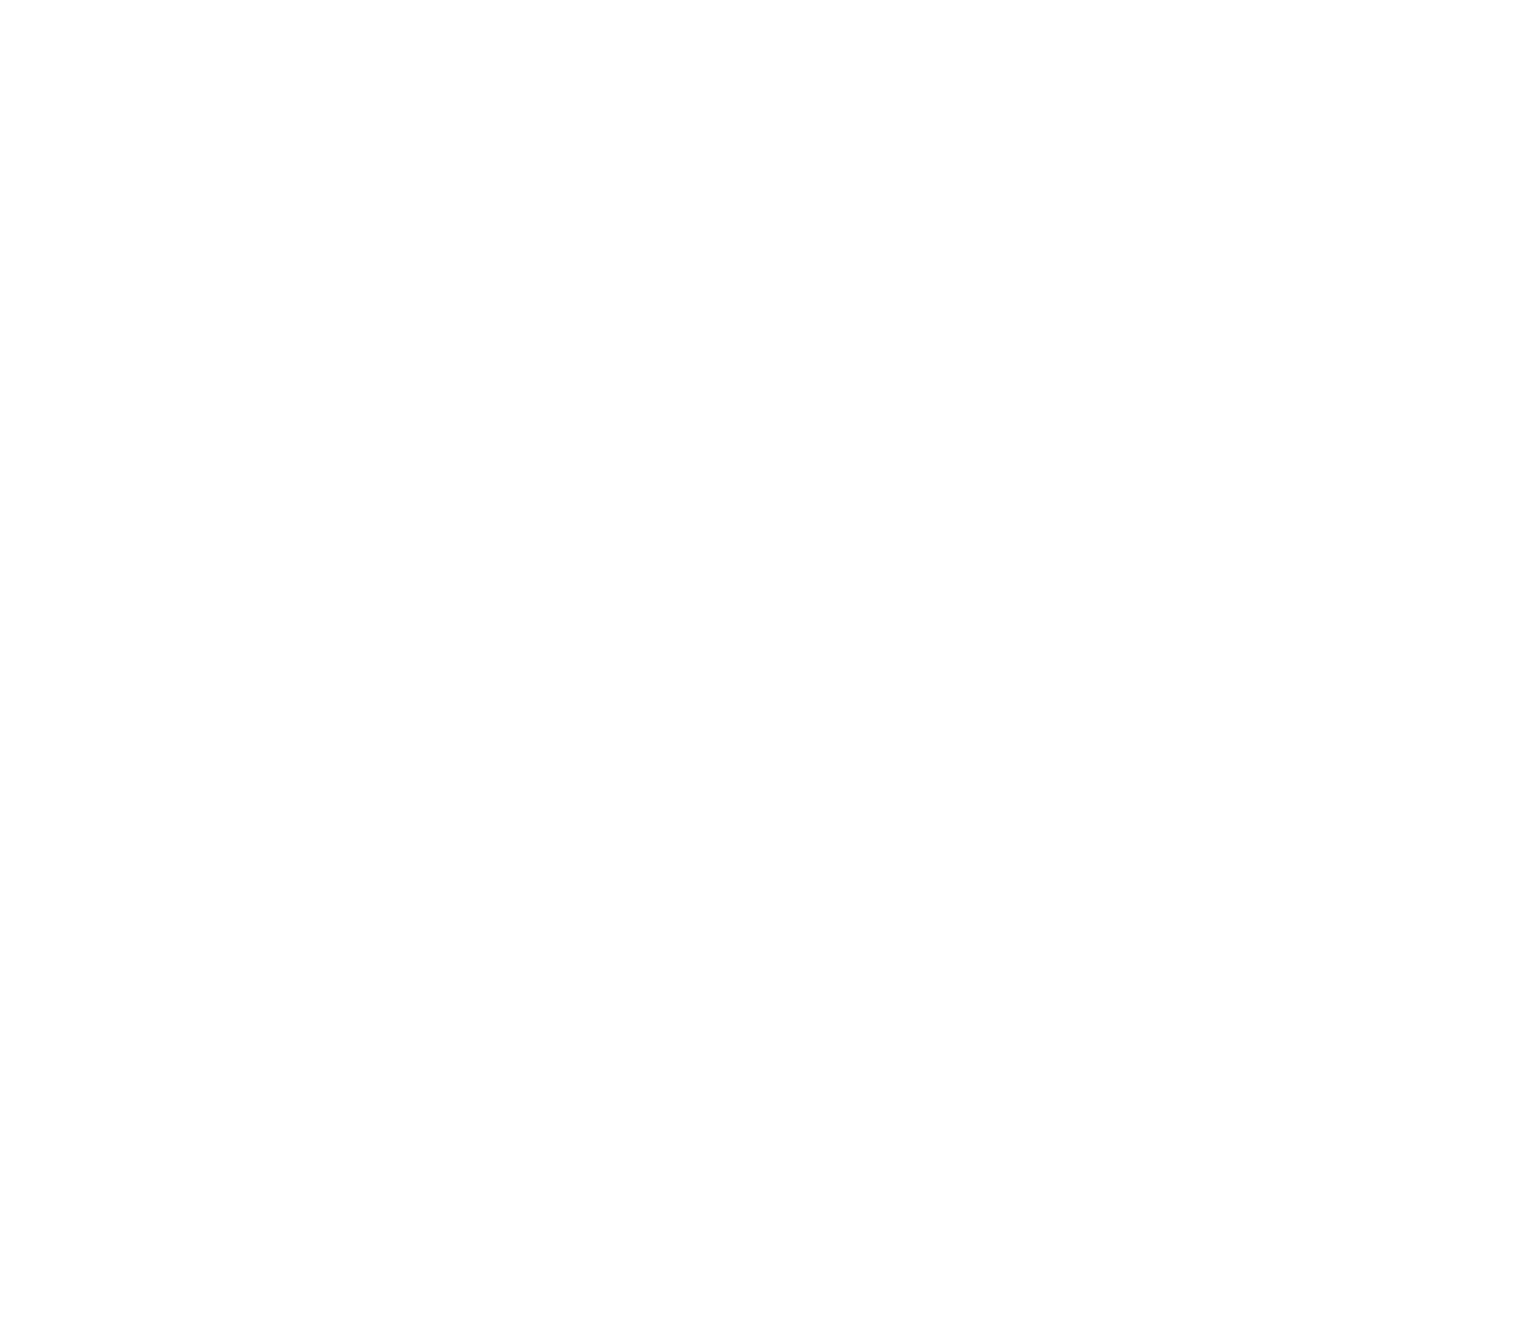 Tata Cliq logo and symbol, meaning, history, PNG